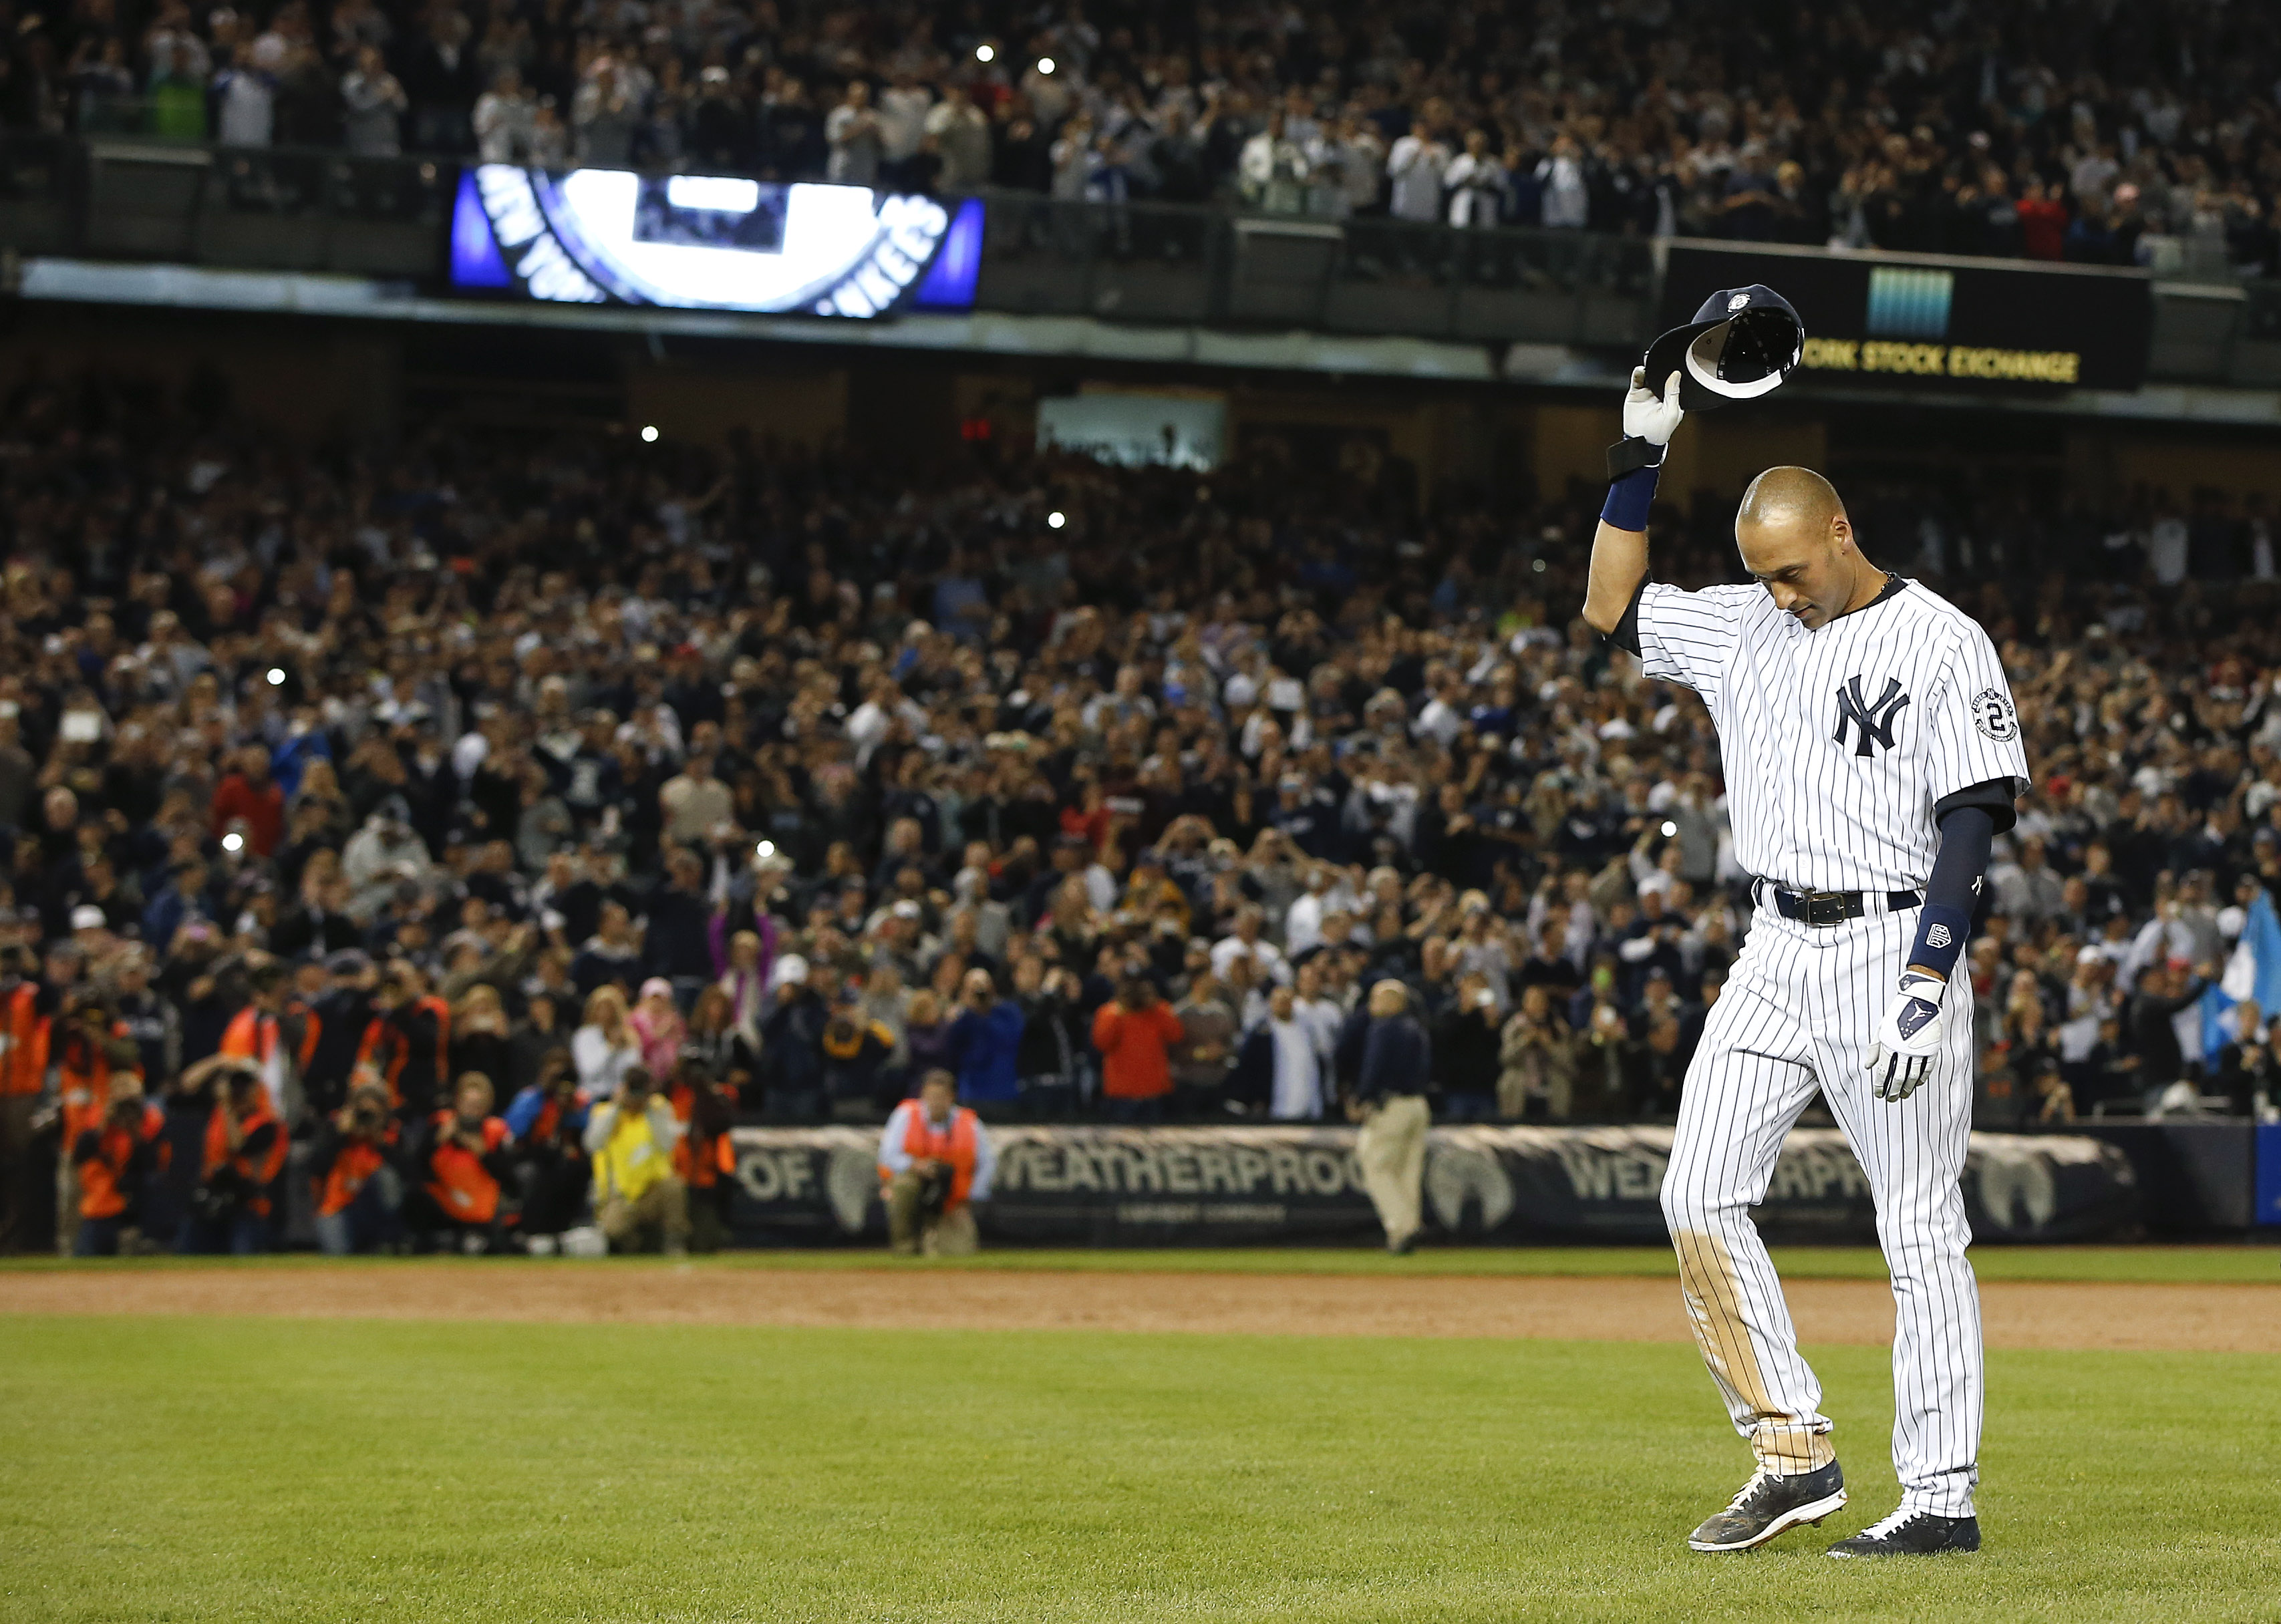 Derek Jeter says goodbye to Yankee Stadium with a 6-5 win - CBS News